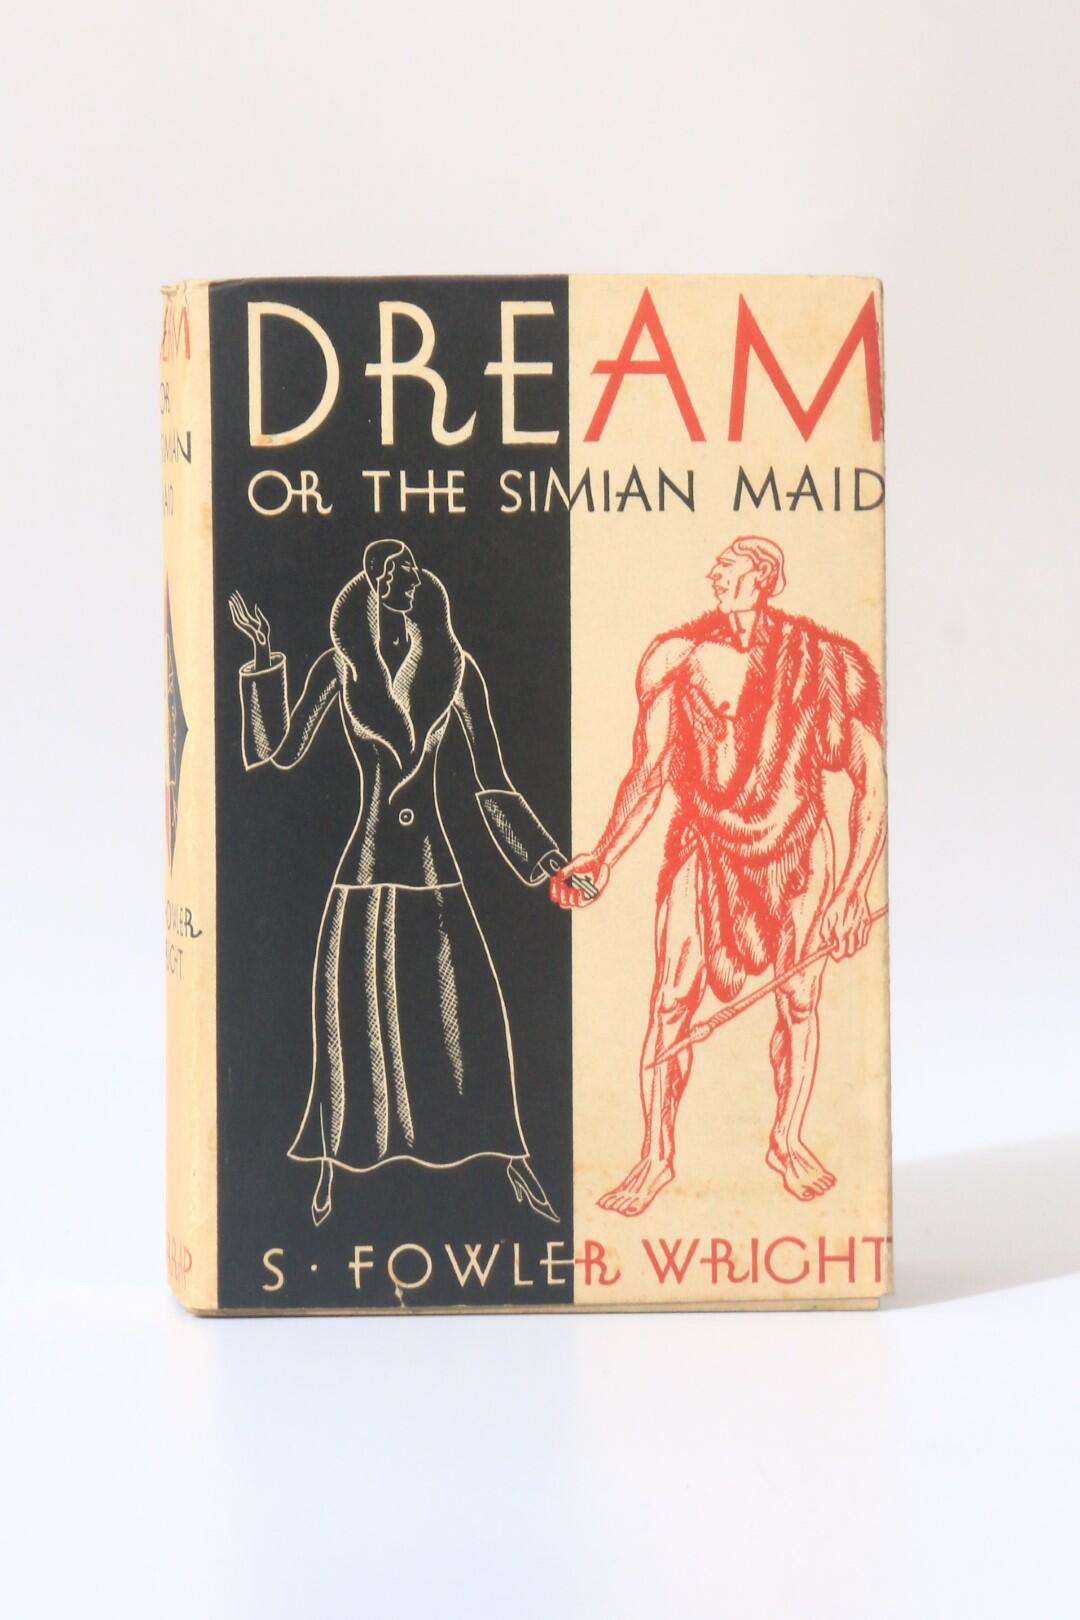 Sydney Fowler Wright - Dream, Or the Simian Maid - George G. Harrap, 1931, Proof.